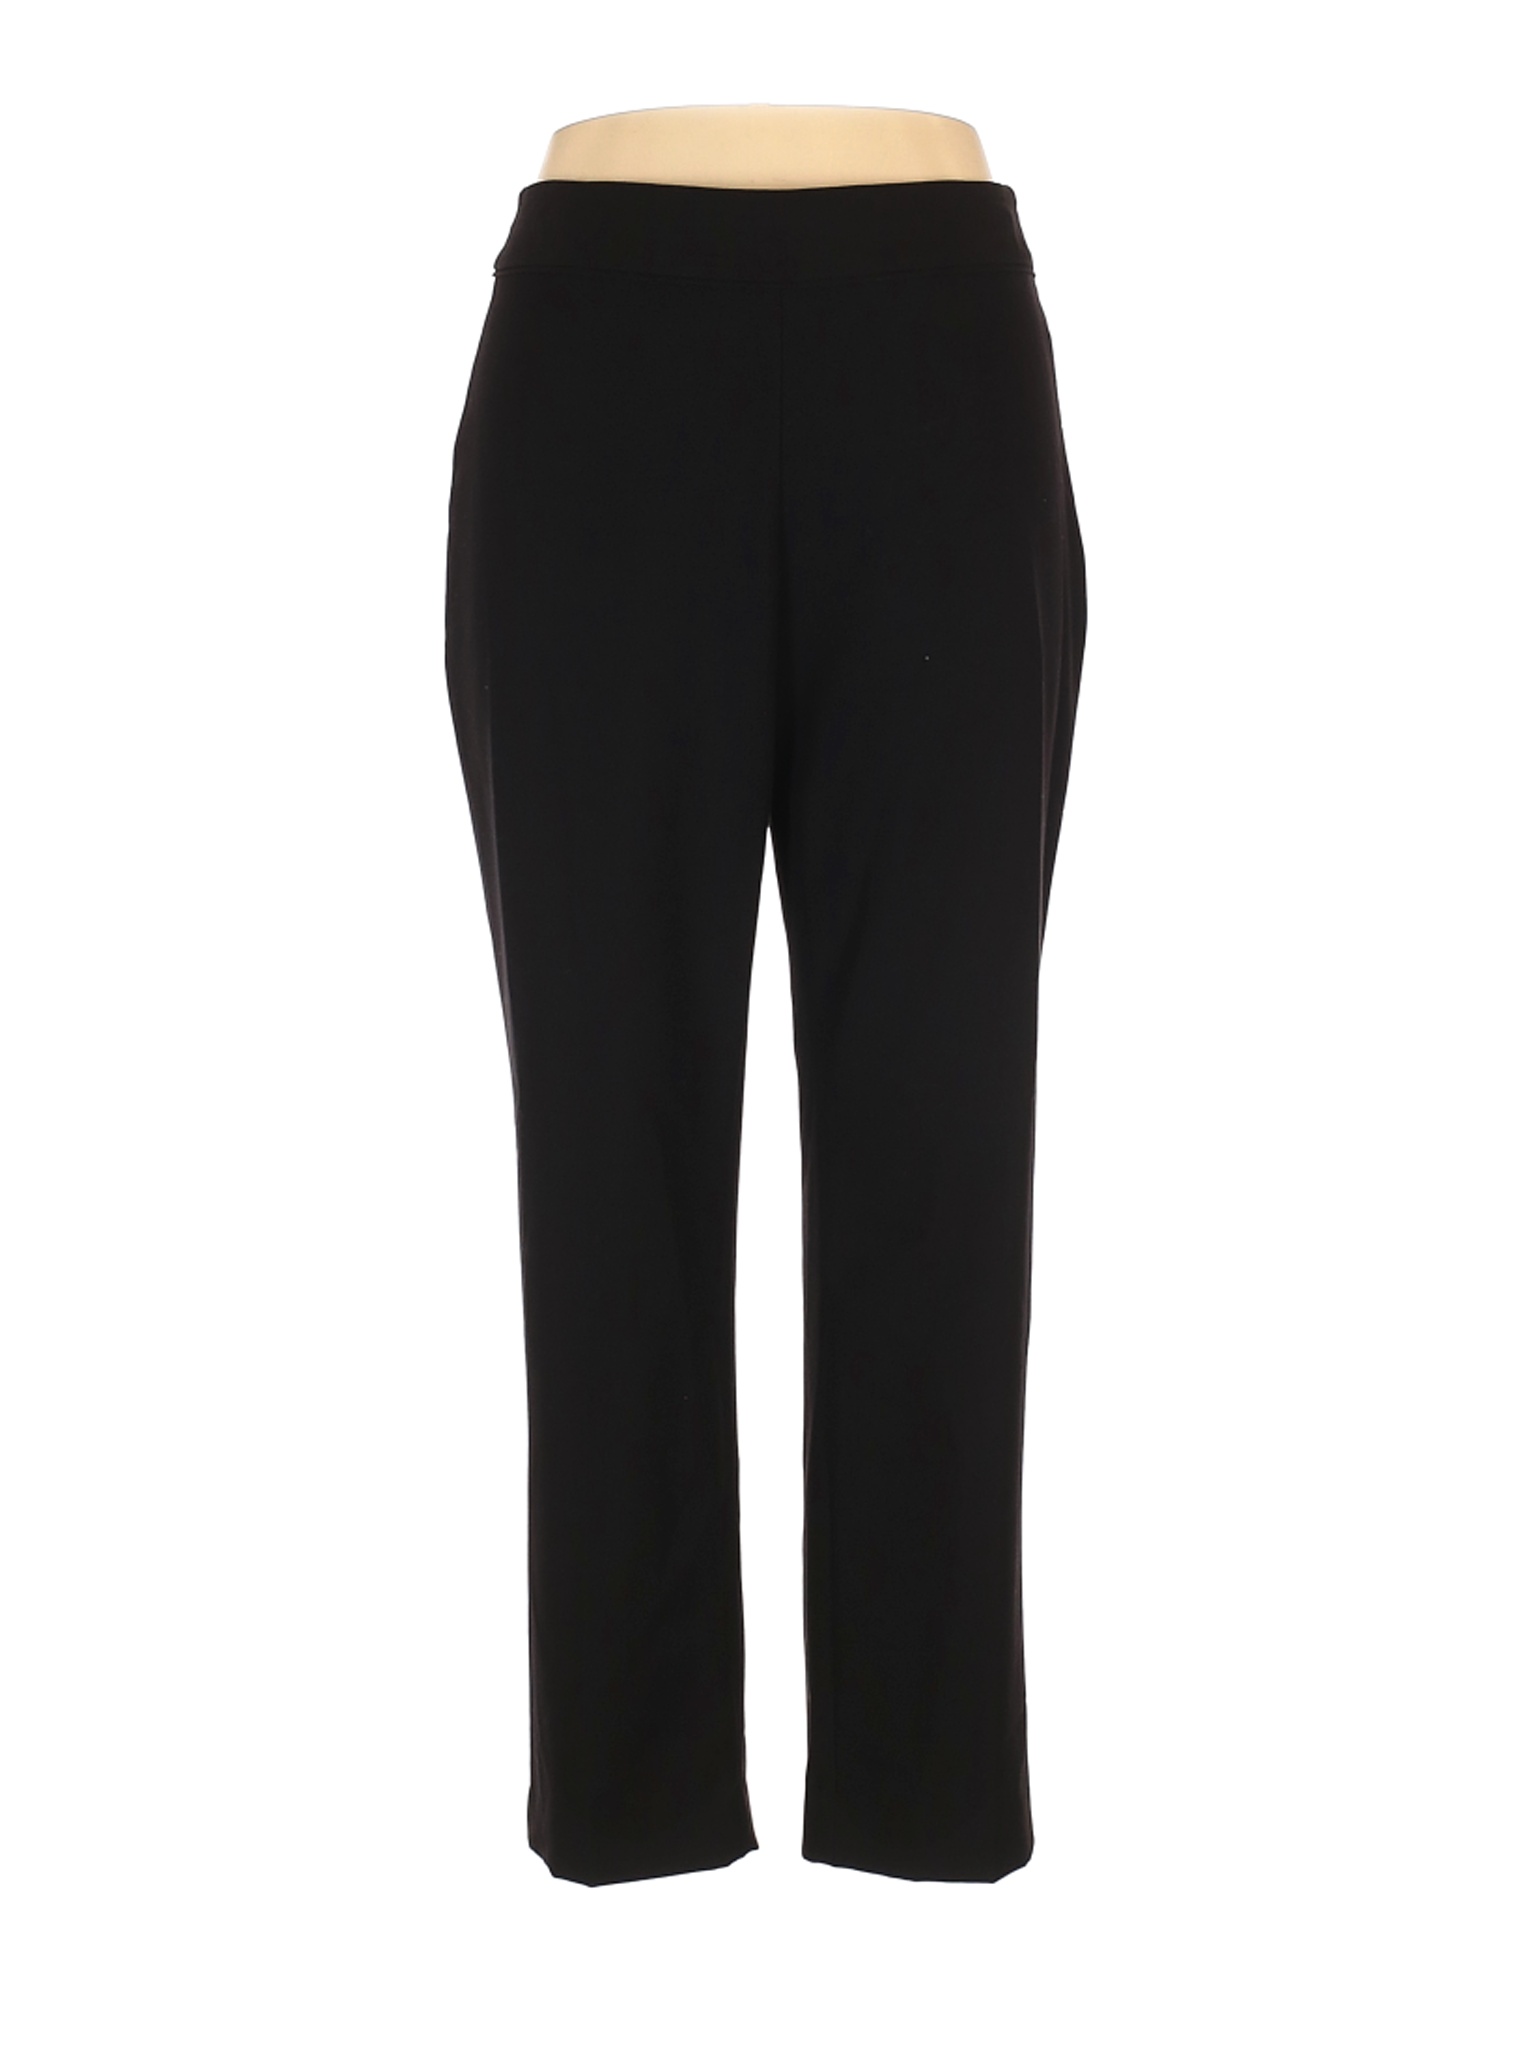 Liz Claiborne Women Black Dress Pants 16 | eBay